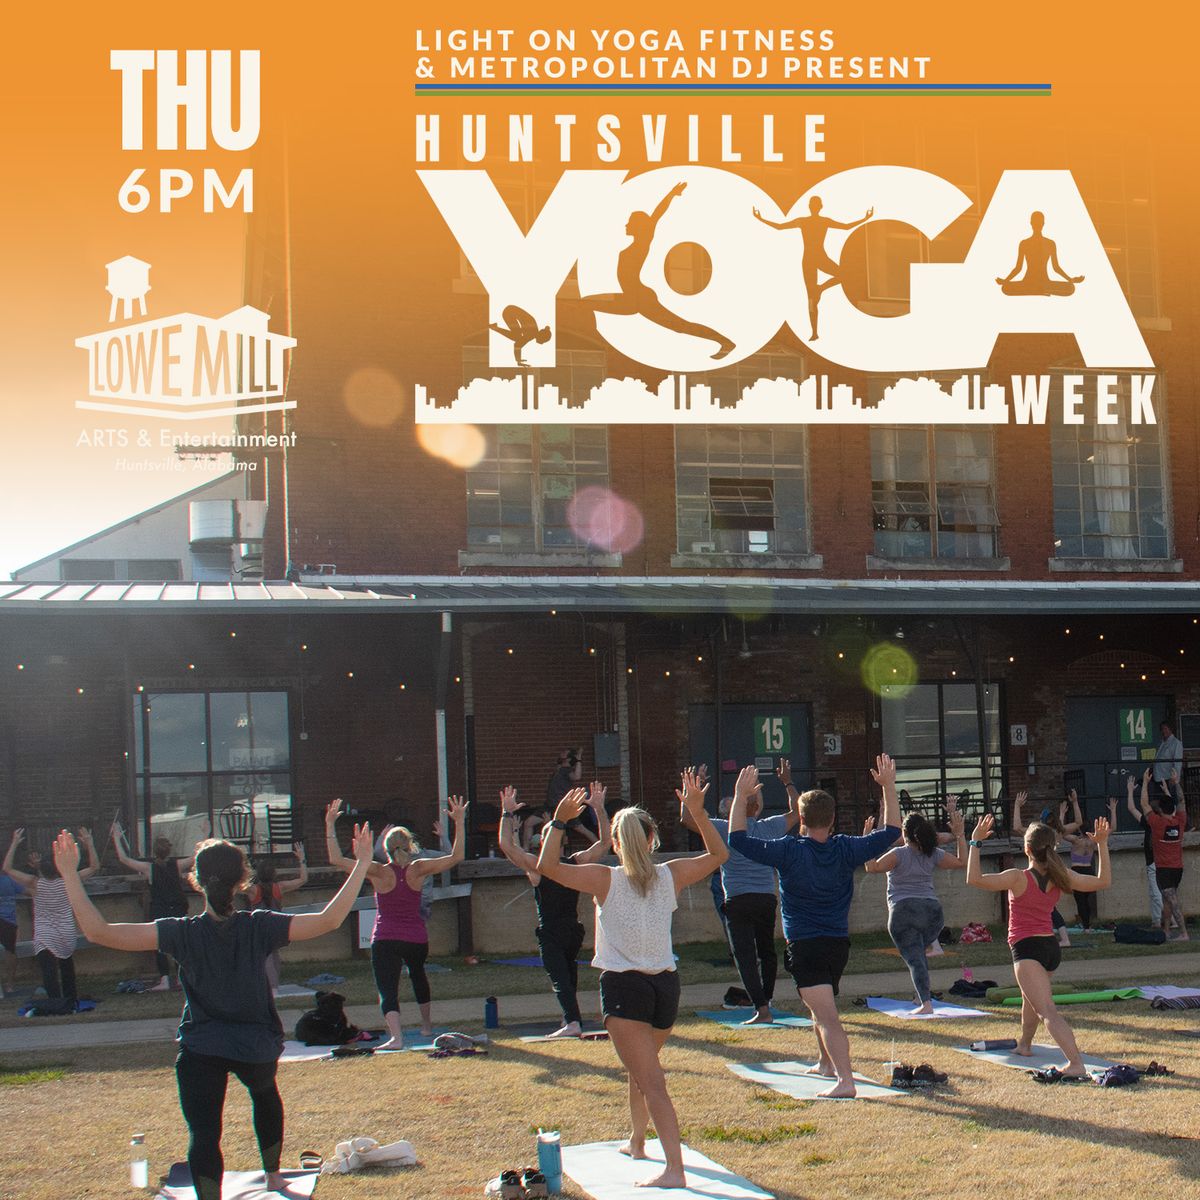 Huntsville Yoga Week - Lowe Mill ARTS & Entertainment